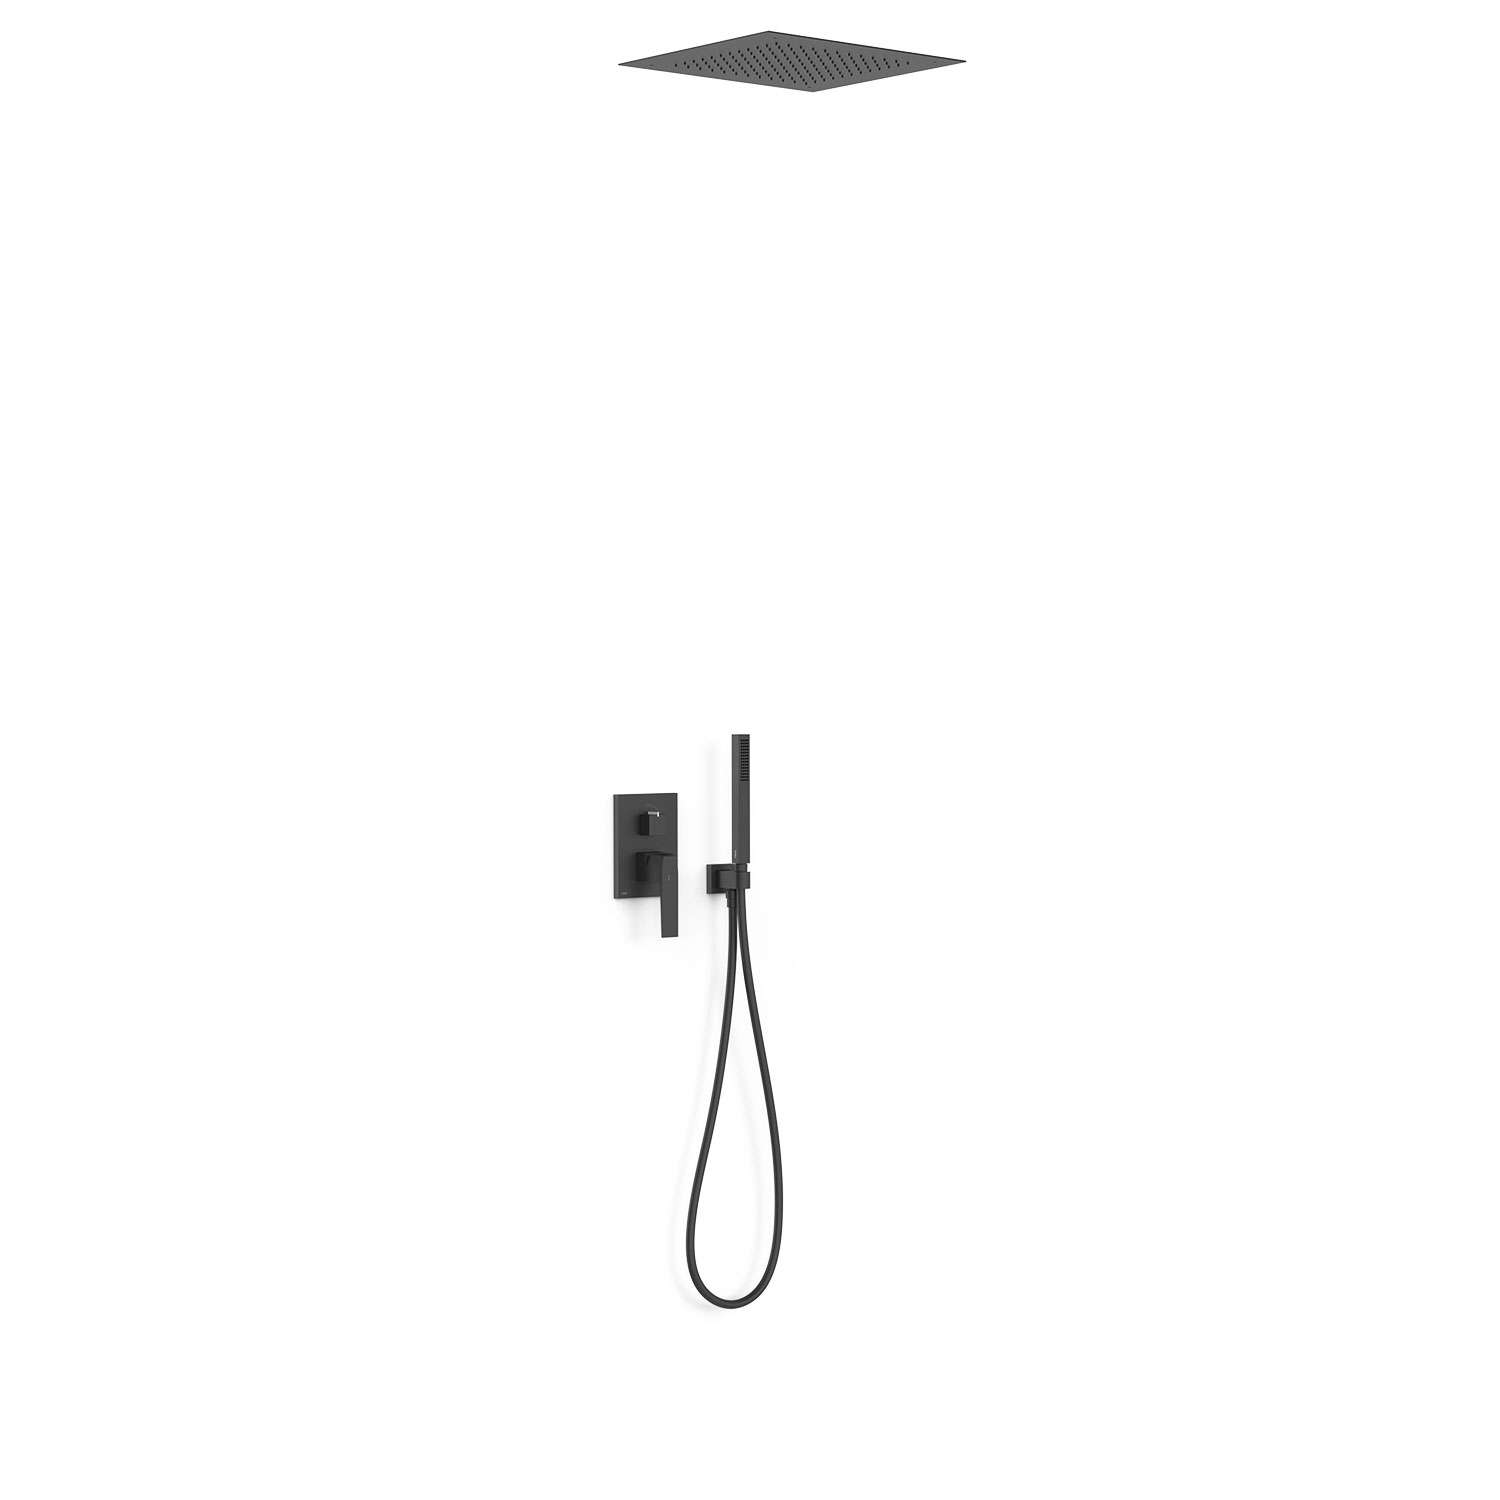 Conjunto de ducha empotrada Rapid-Box Slim Kit negro mate con referencia 20228006NM de la marca TRES GRIFERIA